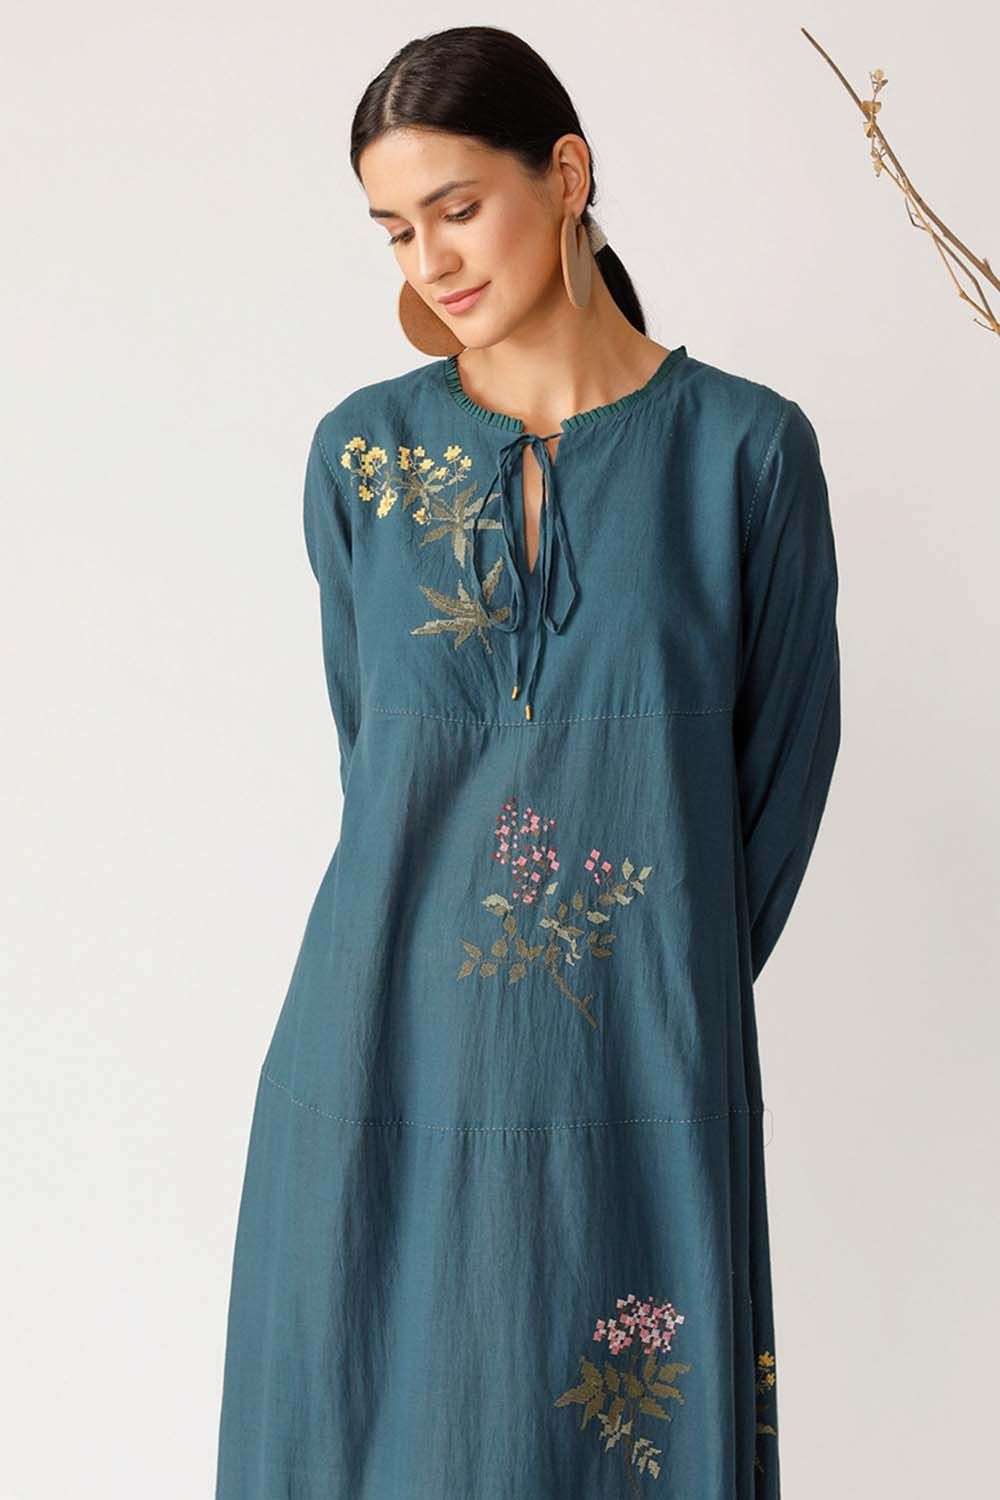 kurti designs, Woman Indian Embroidery Dress Design, Free Suit Design (54)